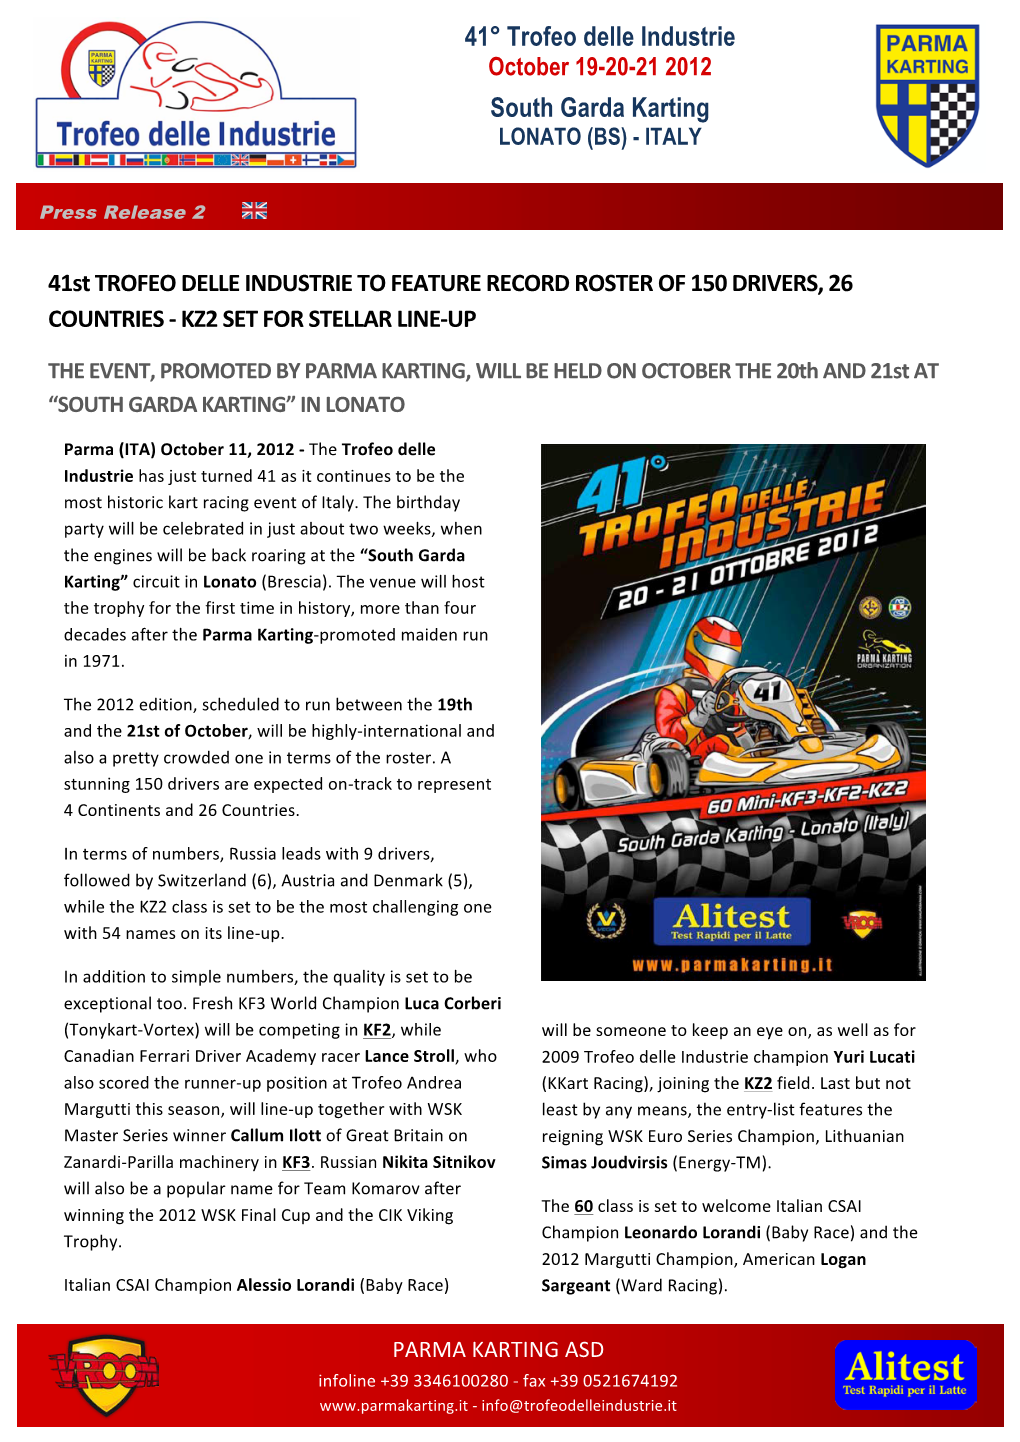 41° Trofeo Delle Industrie South Garda Karting